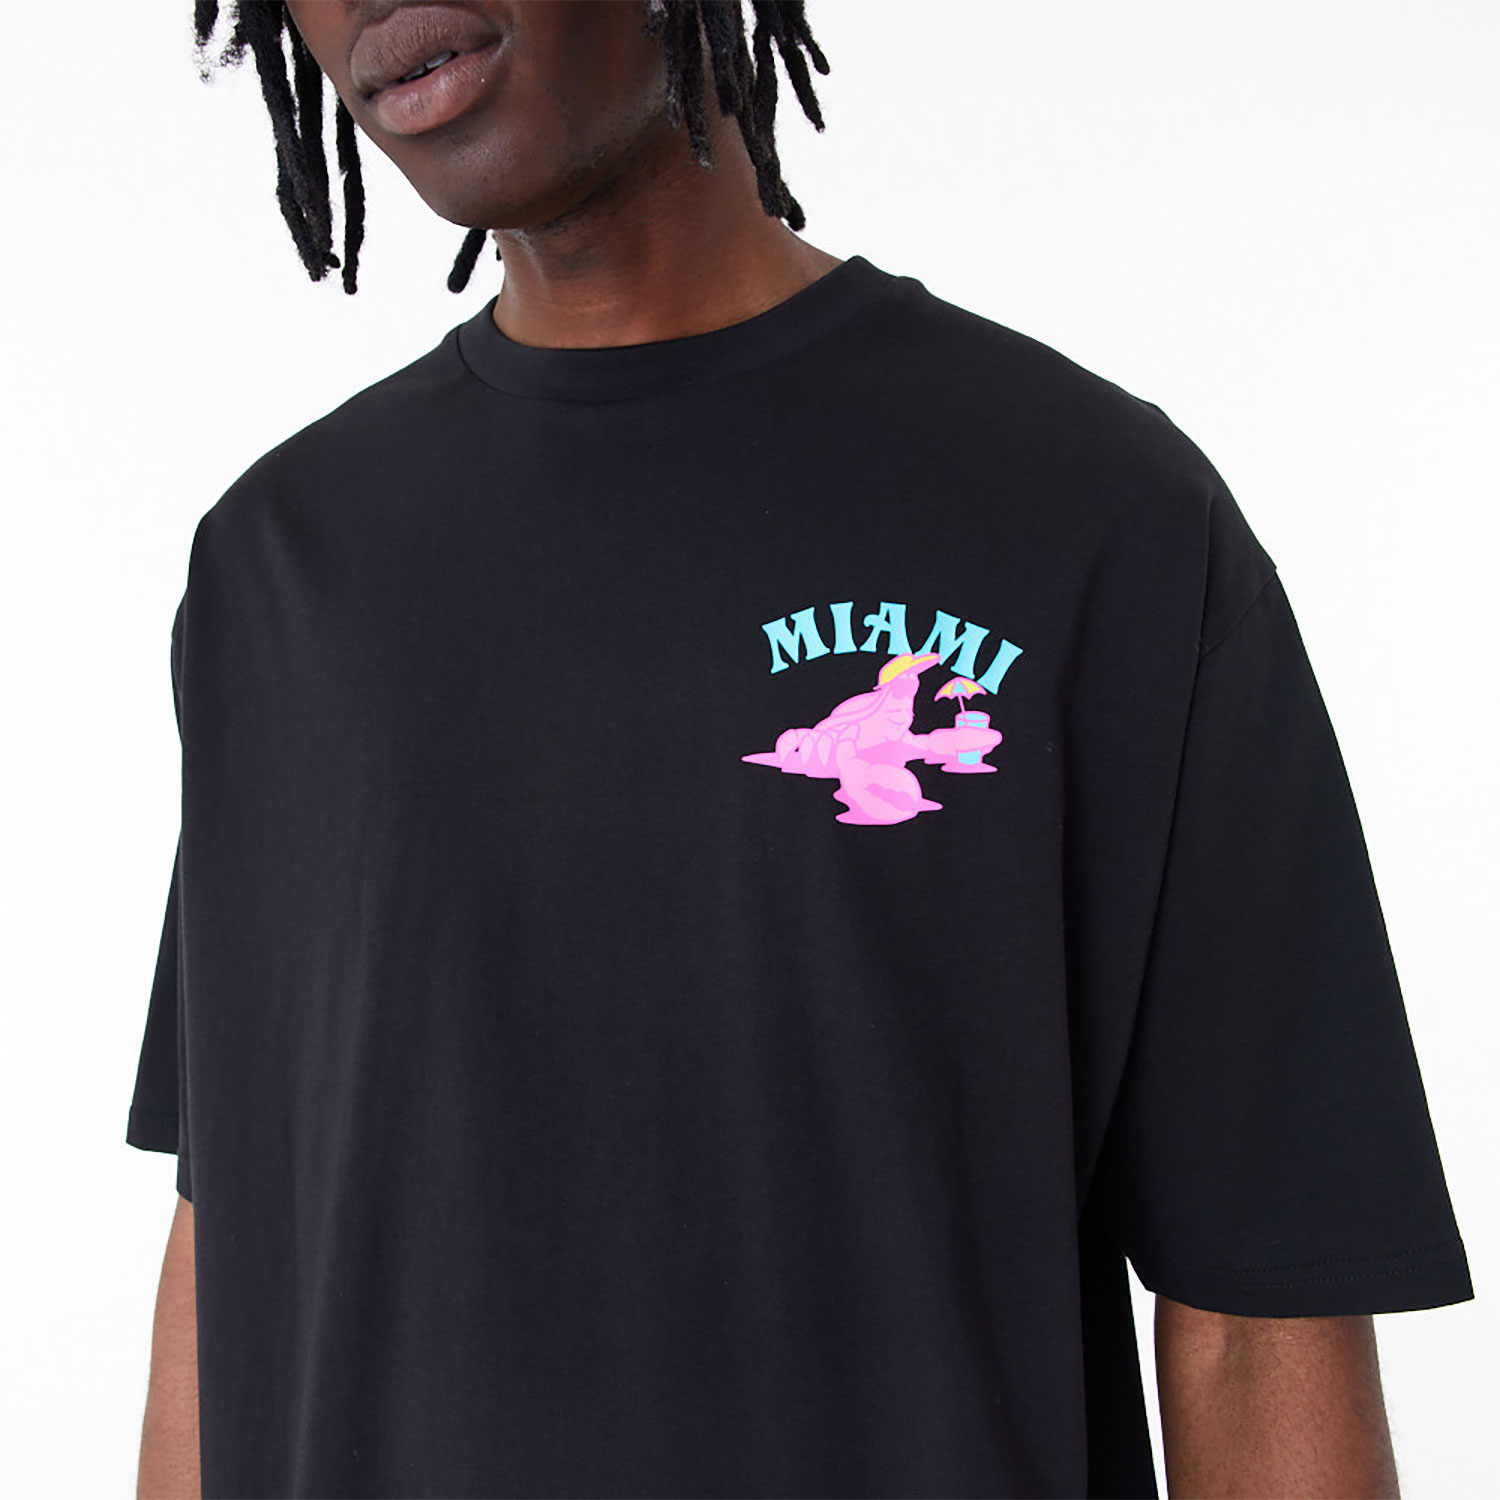 New Era Miami City Graphic Black T-Shirt